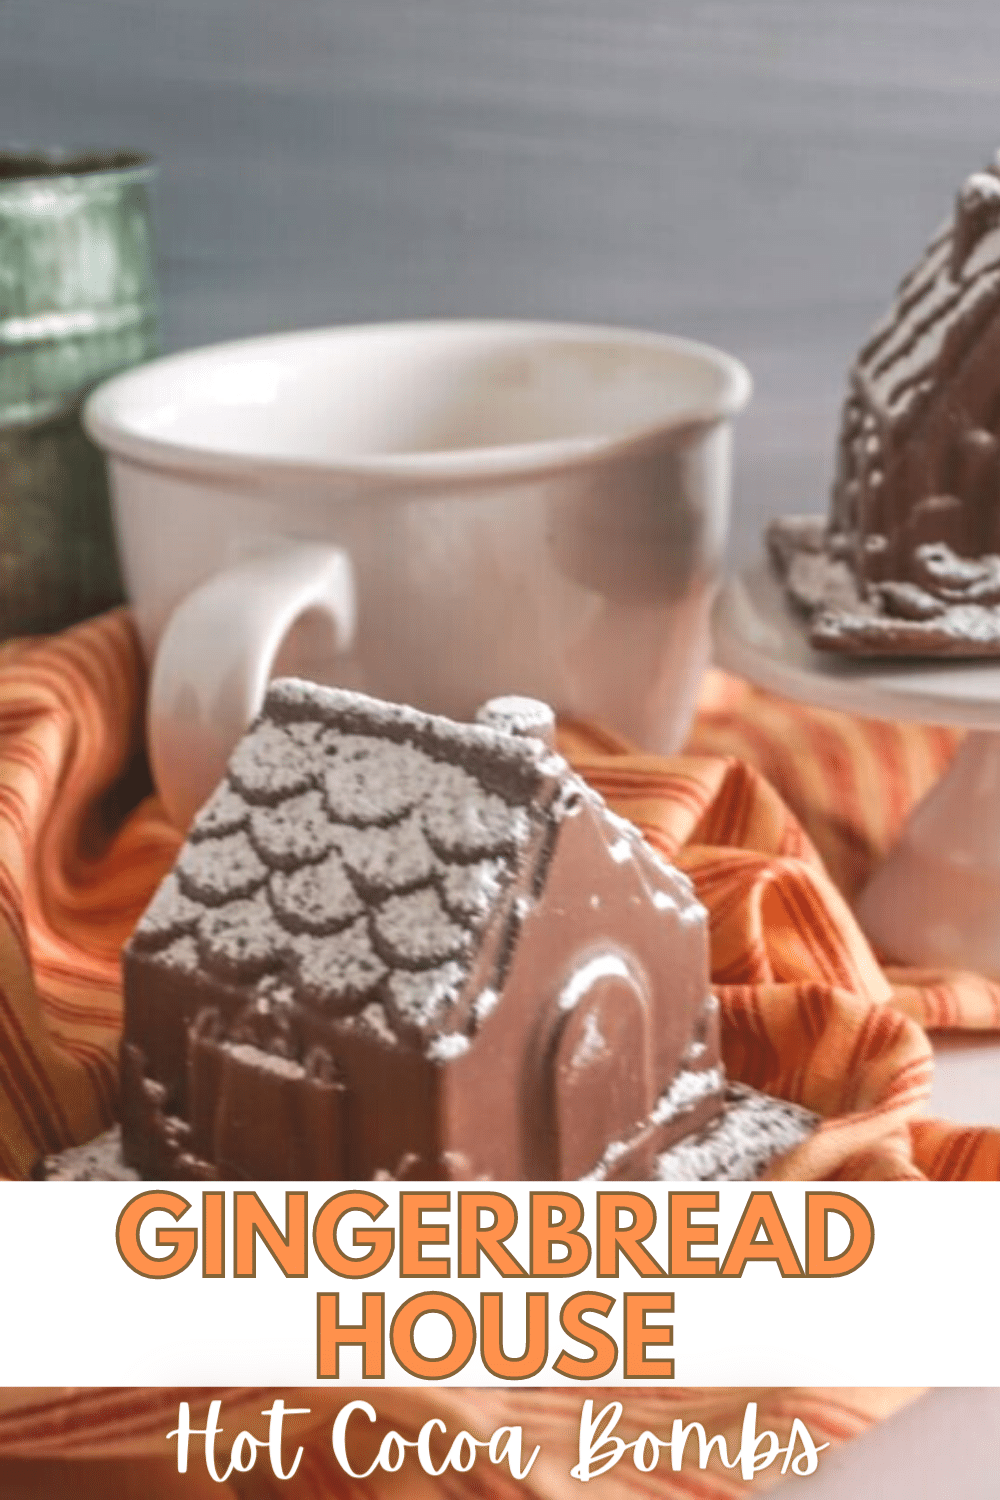 Gingerbread House Hot Cocoa Bomb next to a white mug